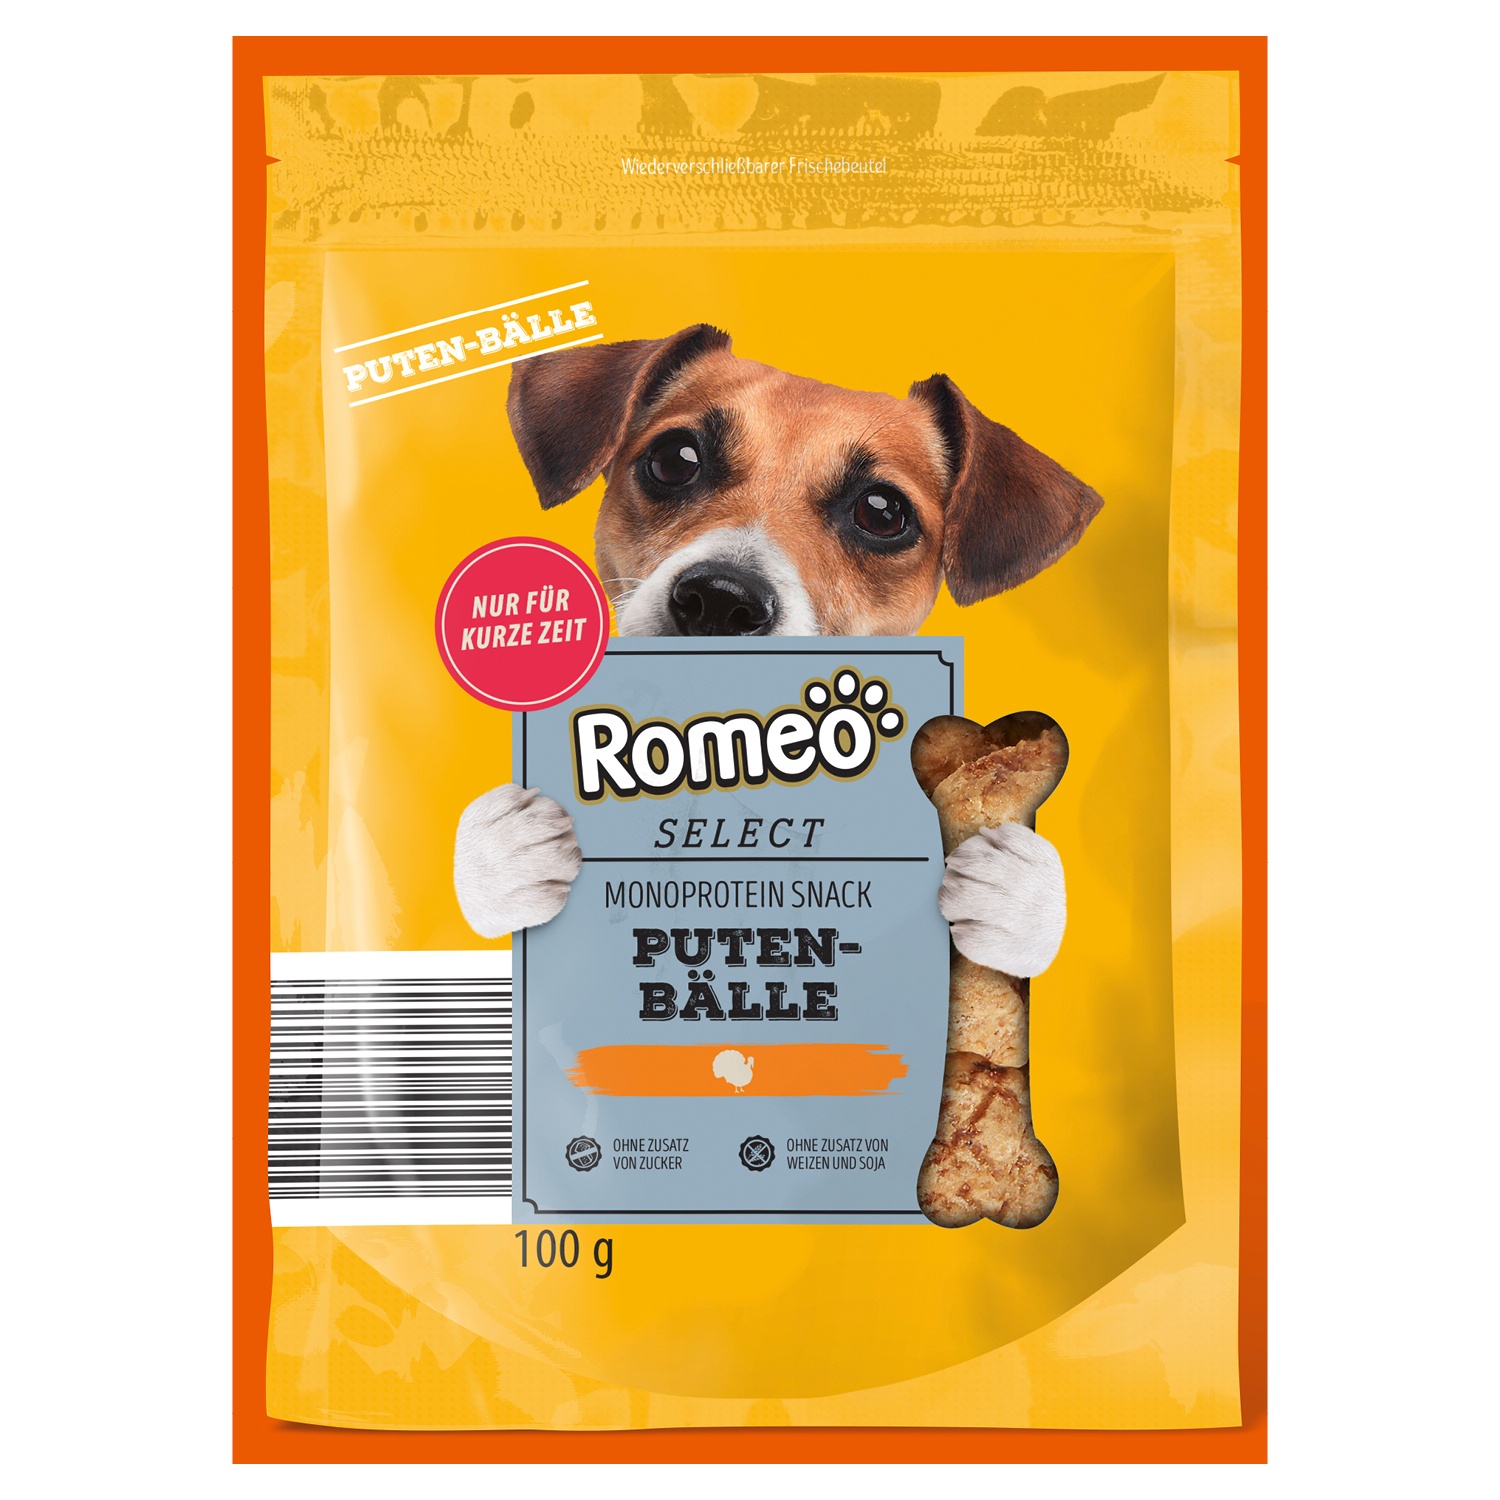 Romeo Select Monoprotein Snack 100 g